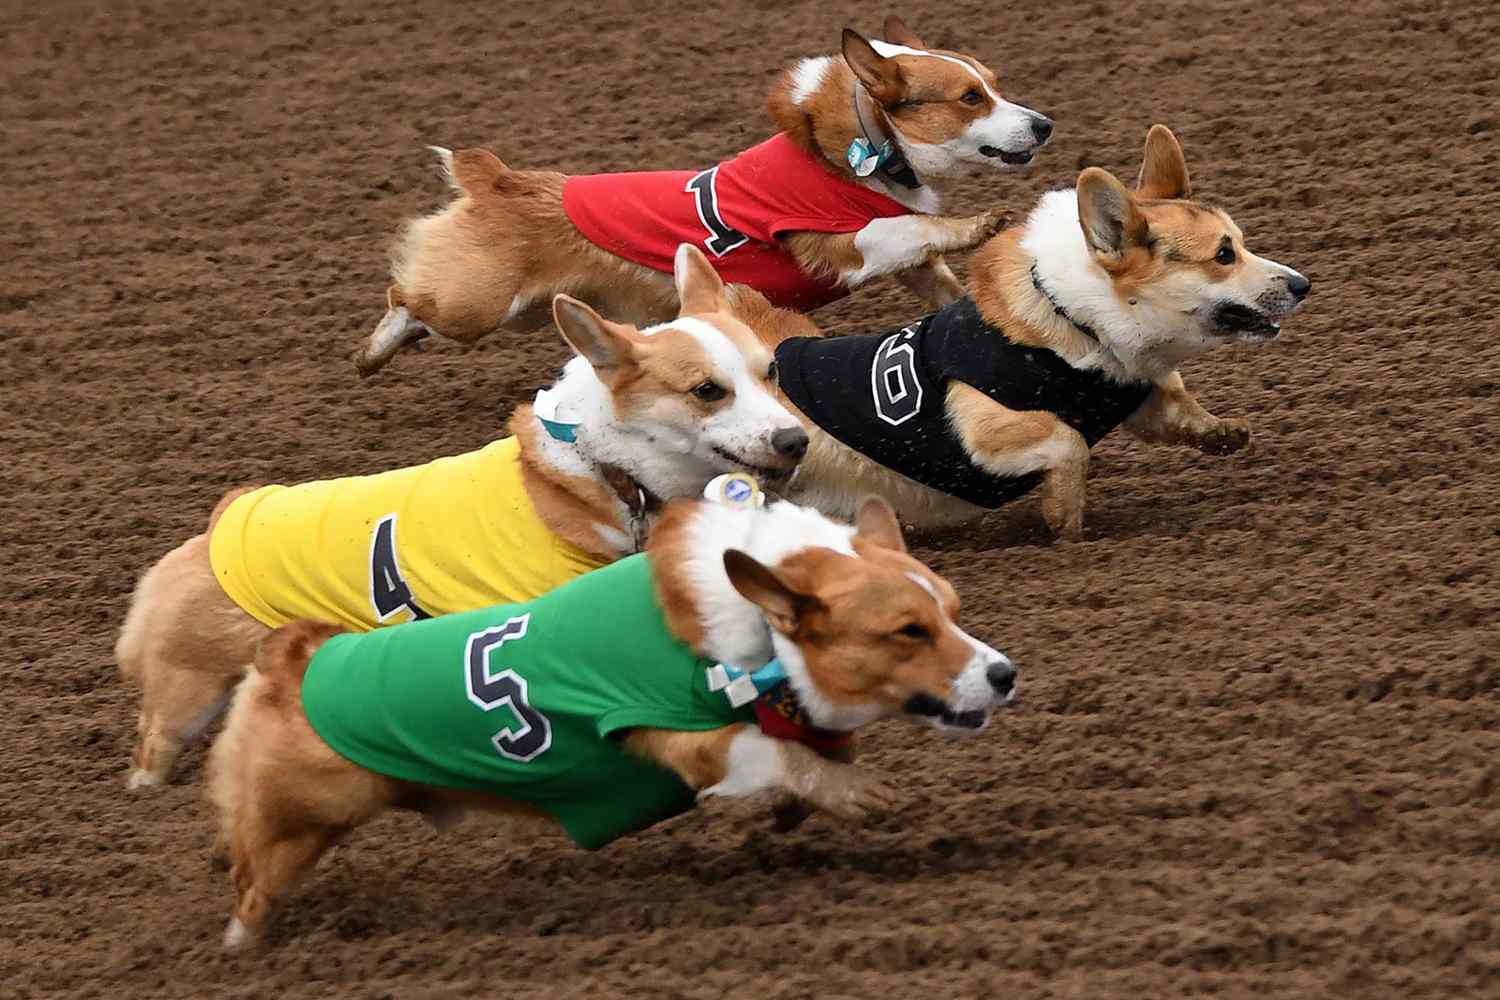 corgis racing on a race track